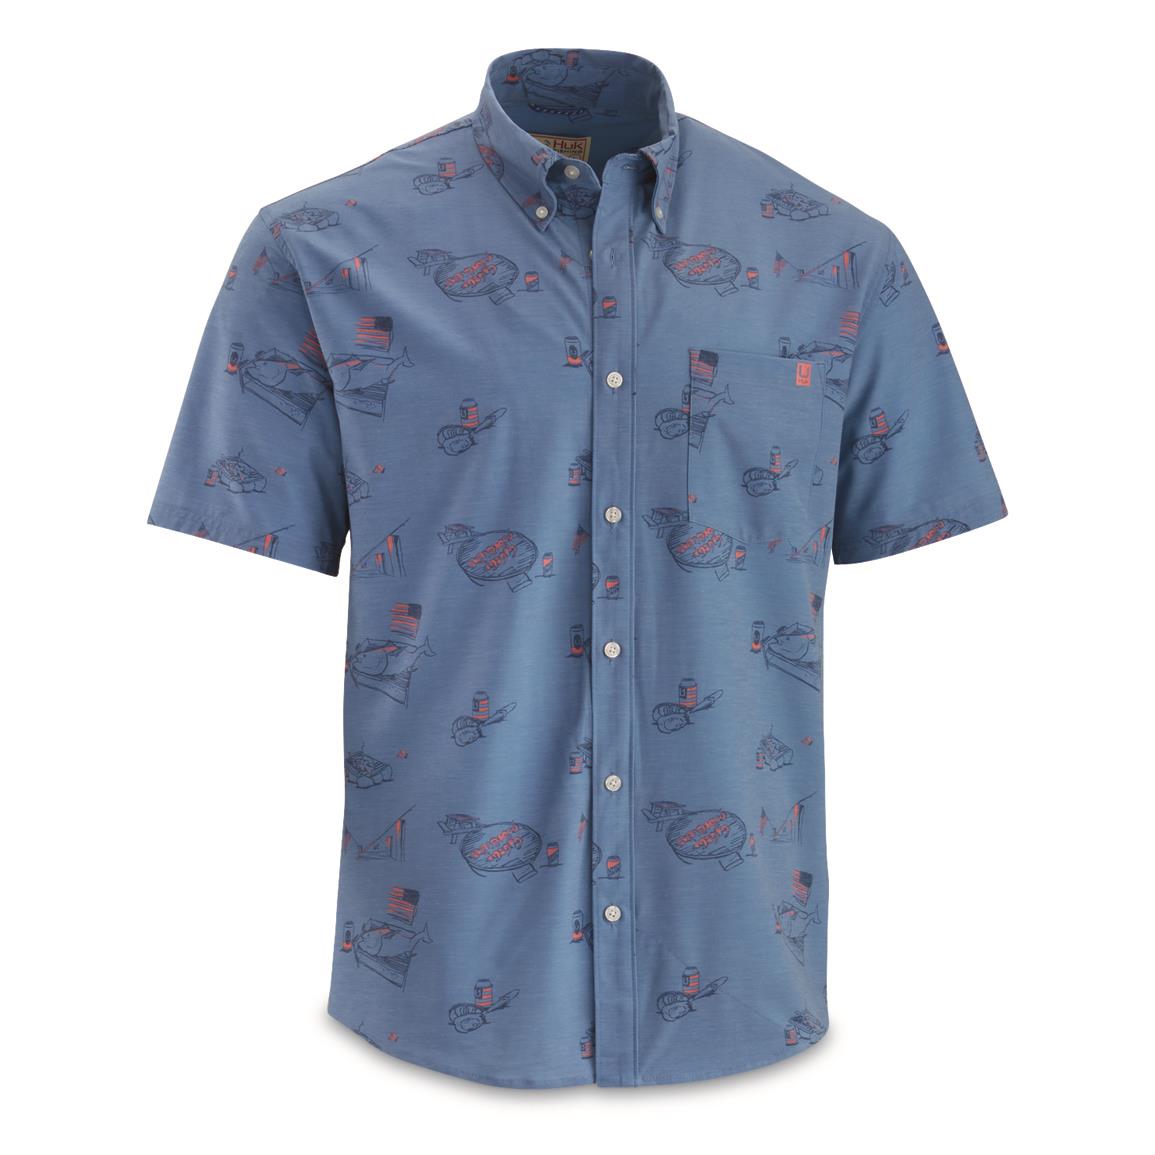 Huk Men's Americookin Kona Button-Down Shirt, Medium, Quiet Harbor